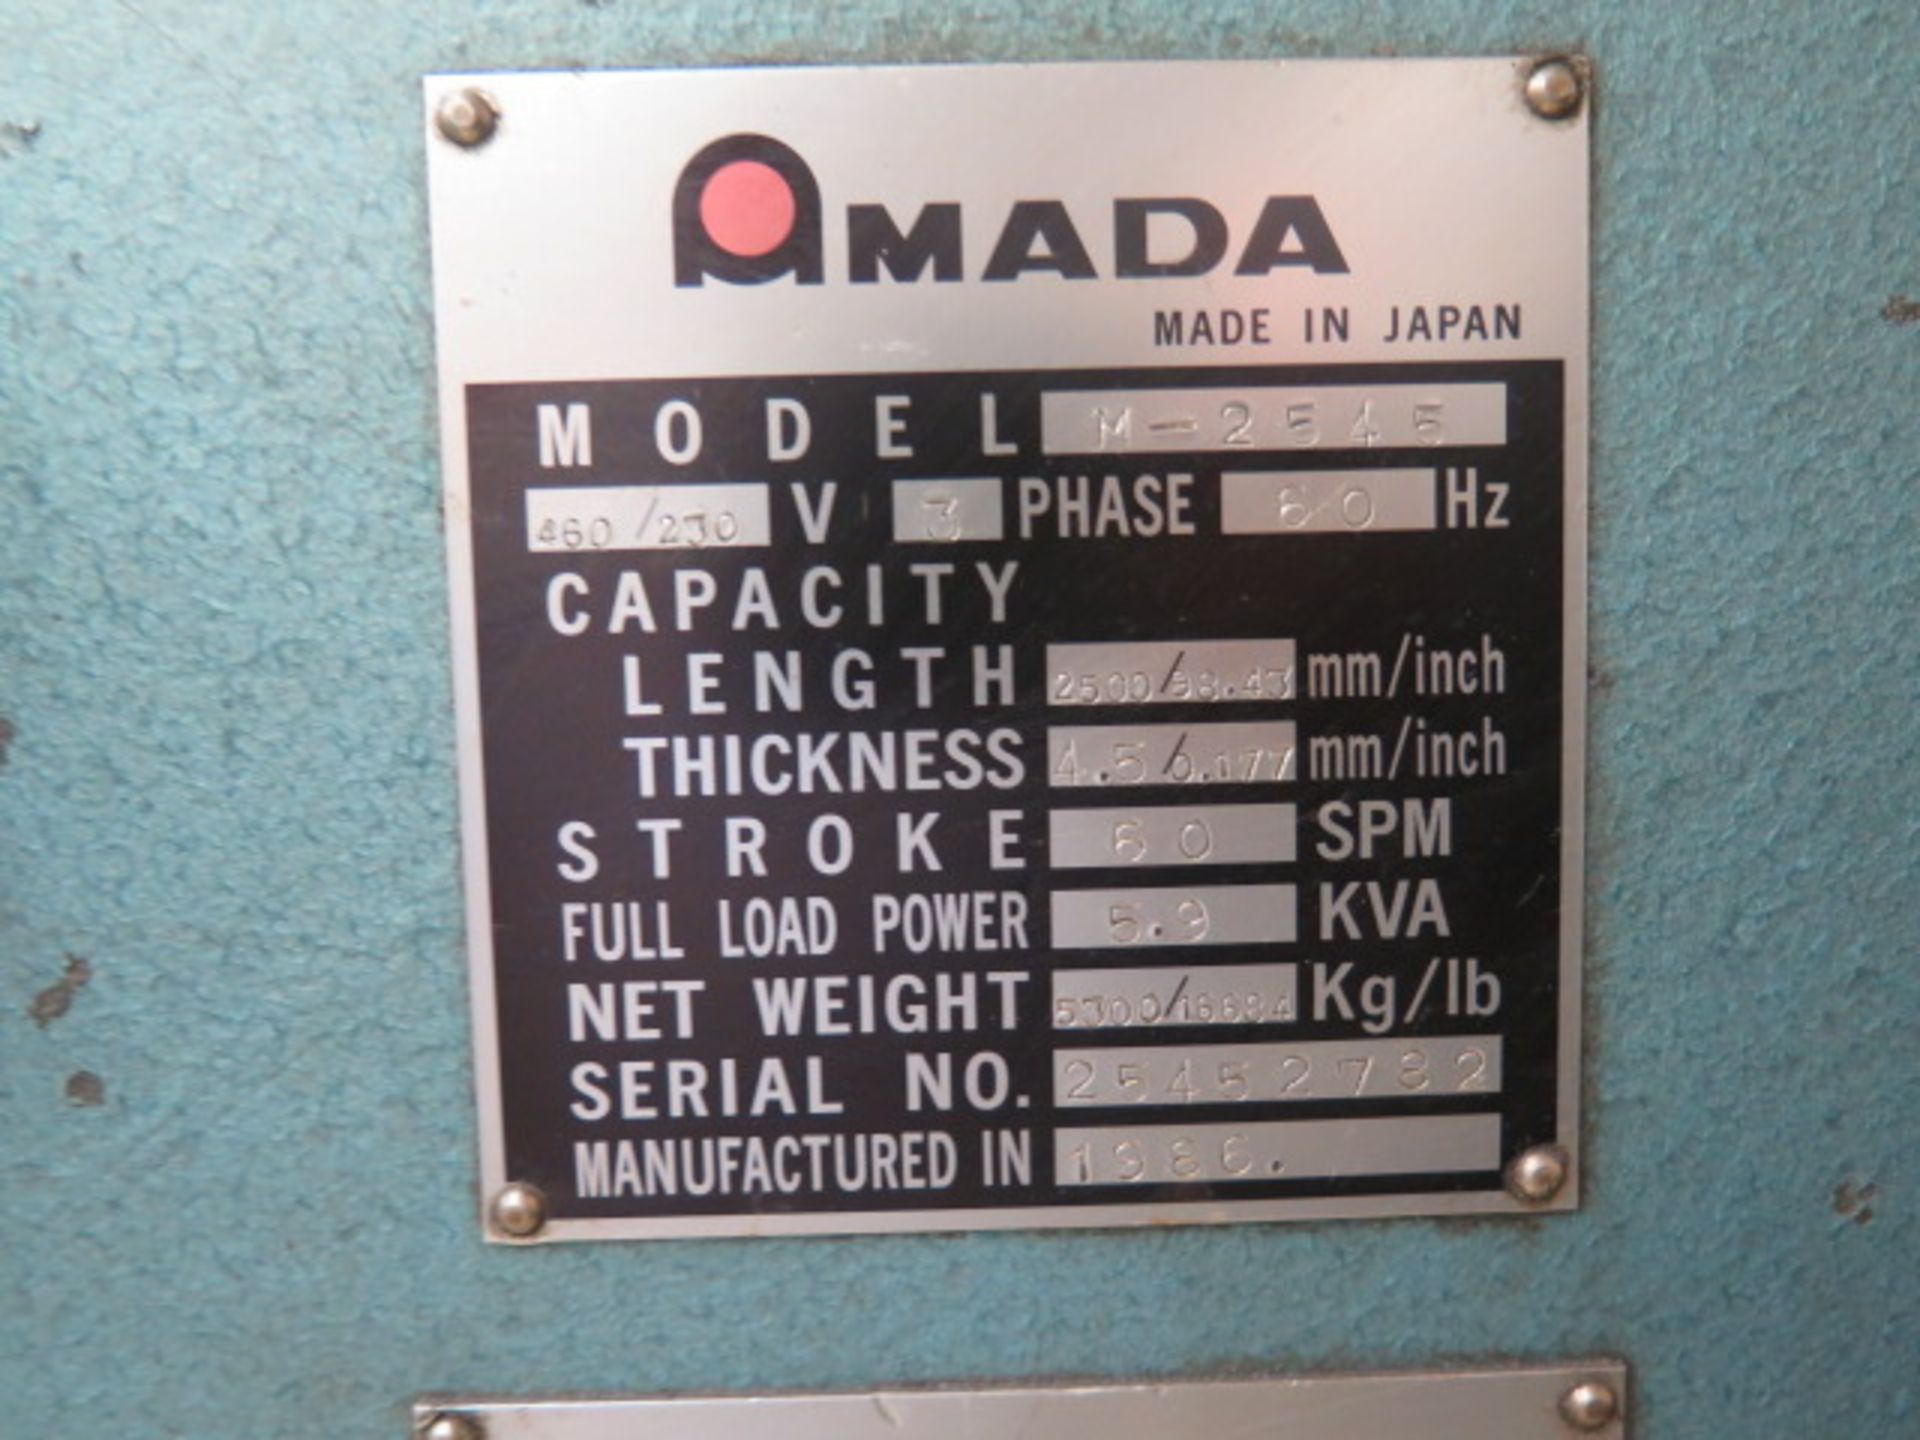 1986 Amada mdl. M-2545 3/16” x 98” Power Shear s/n 25452782 w/ Amada Controls and Back Gaging, 98. - Image 8 of 8